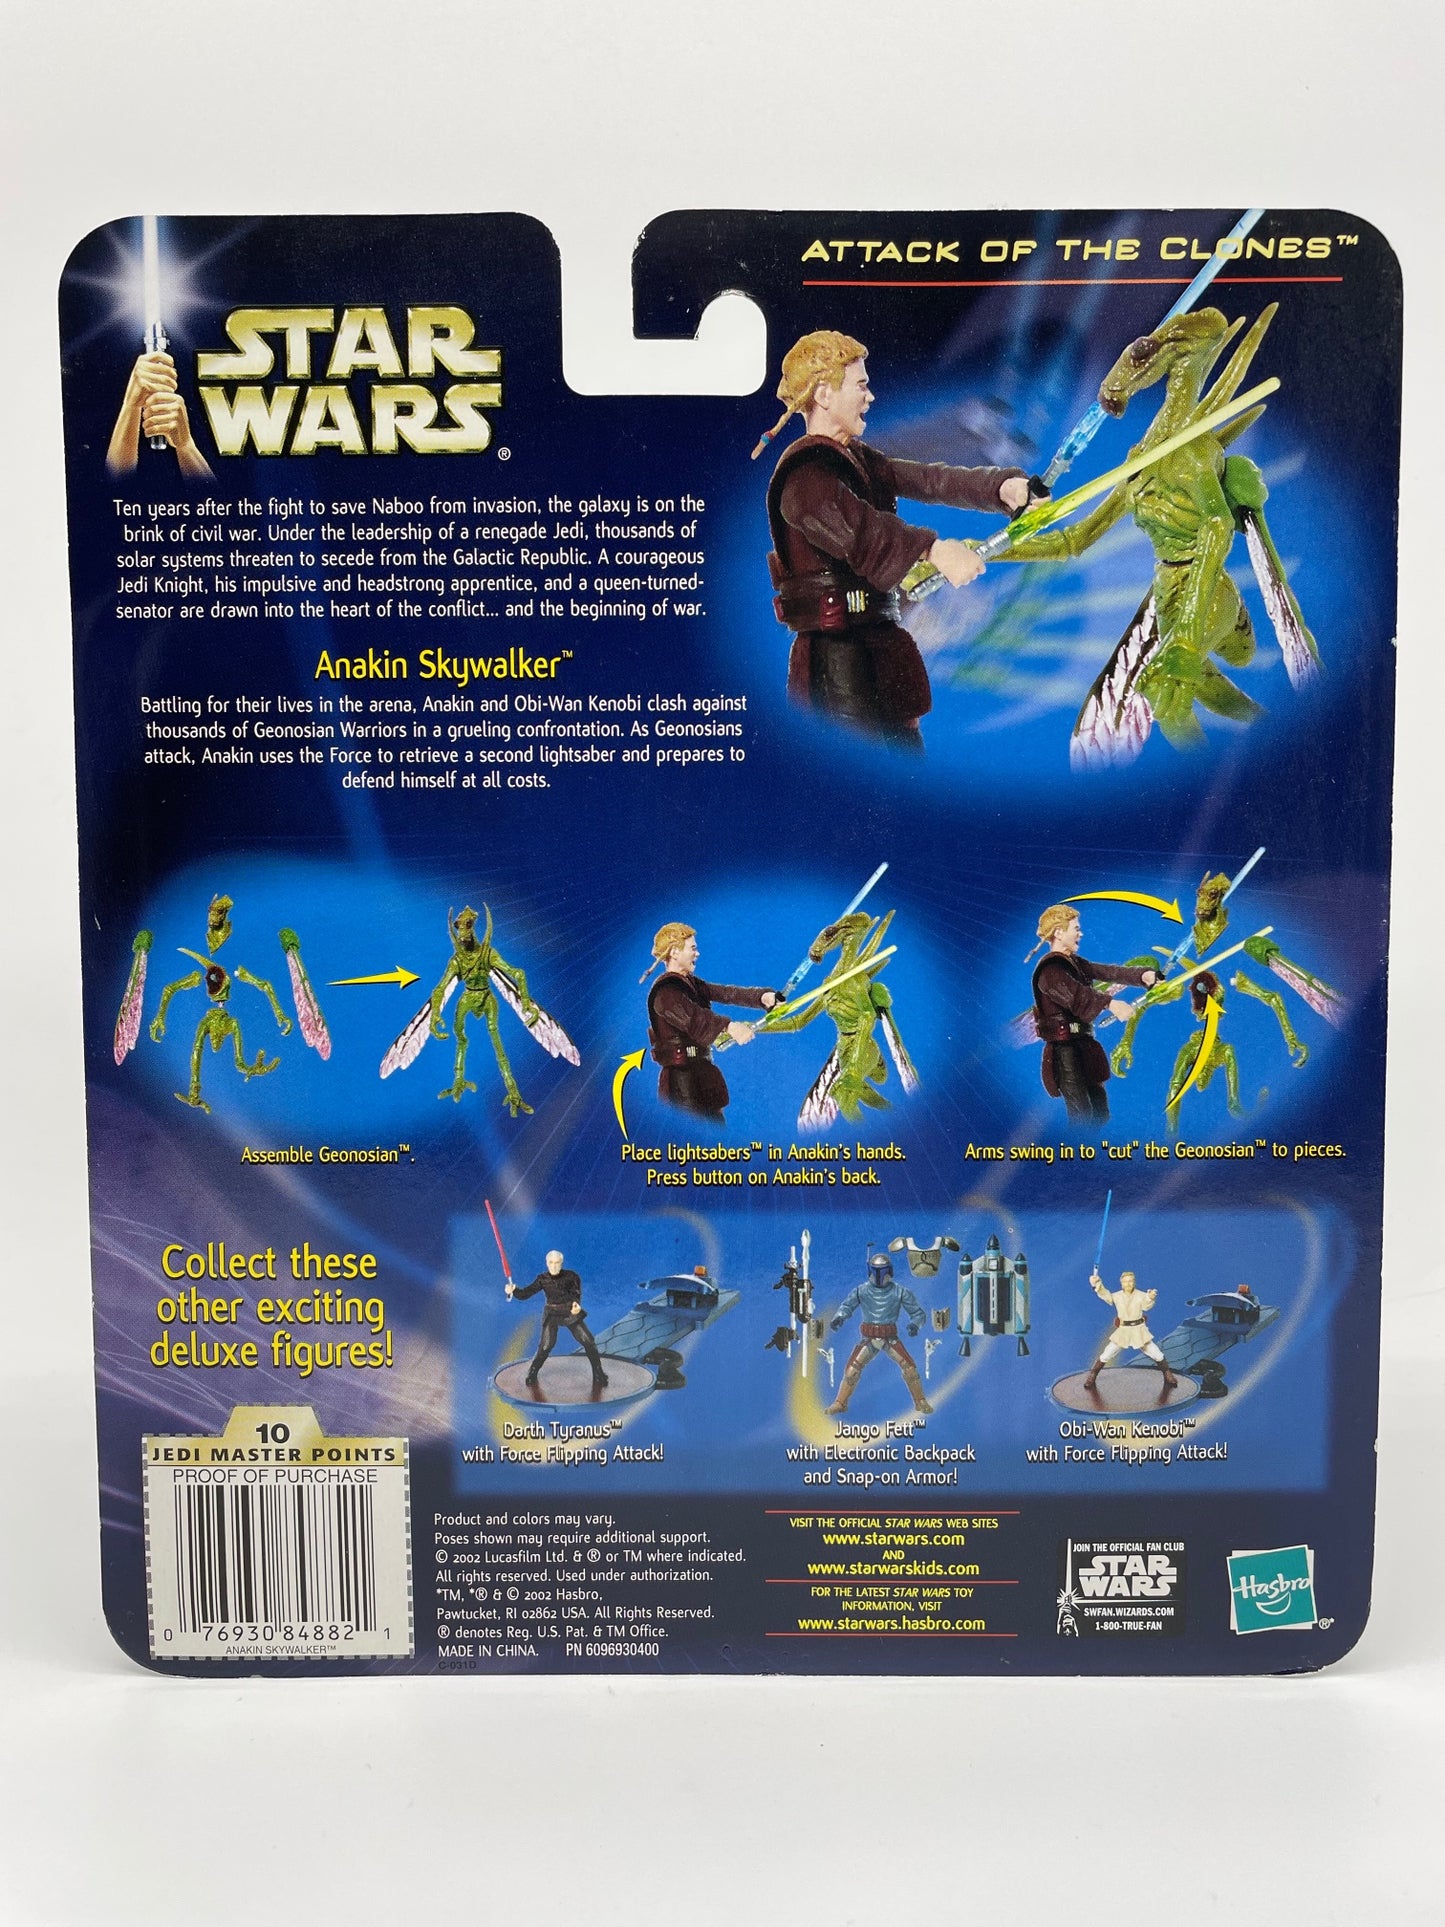 Attack of the Clones Anakin Skywalker (Lightsaber Slashing) Deluxe Figure Set, Hasbro 2002